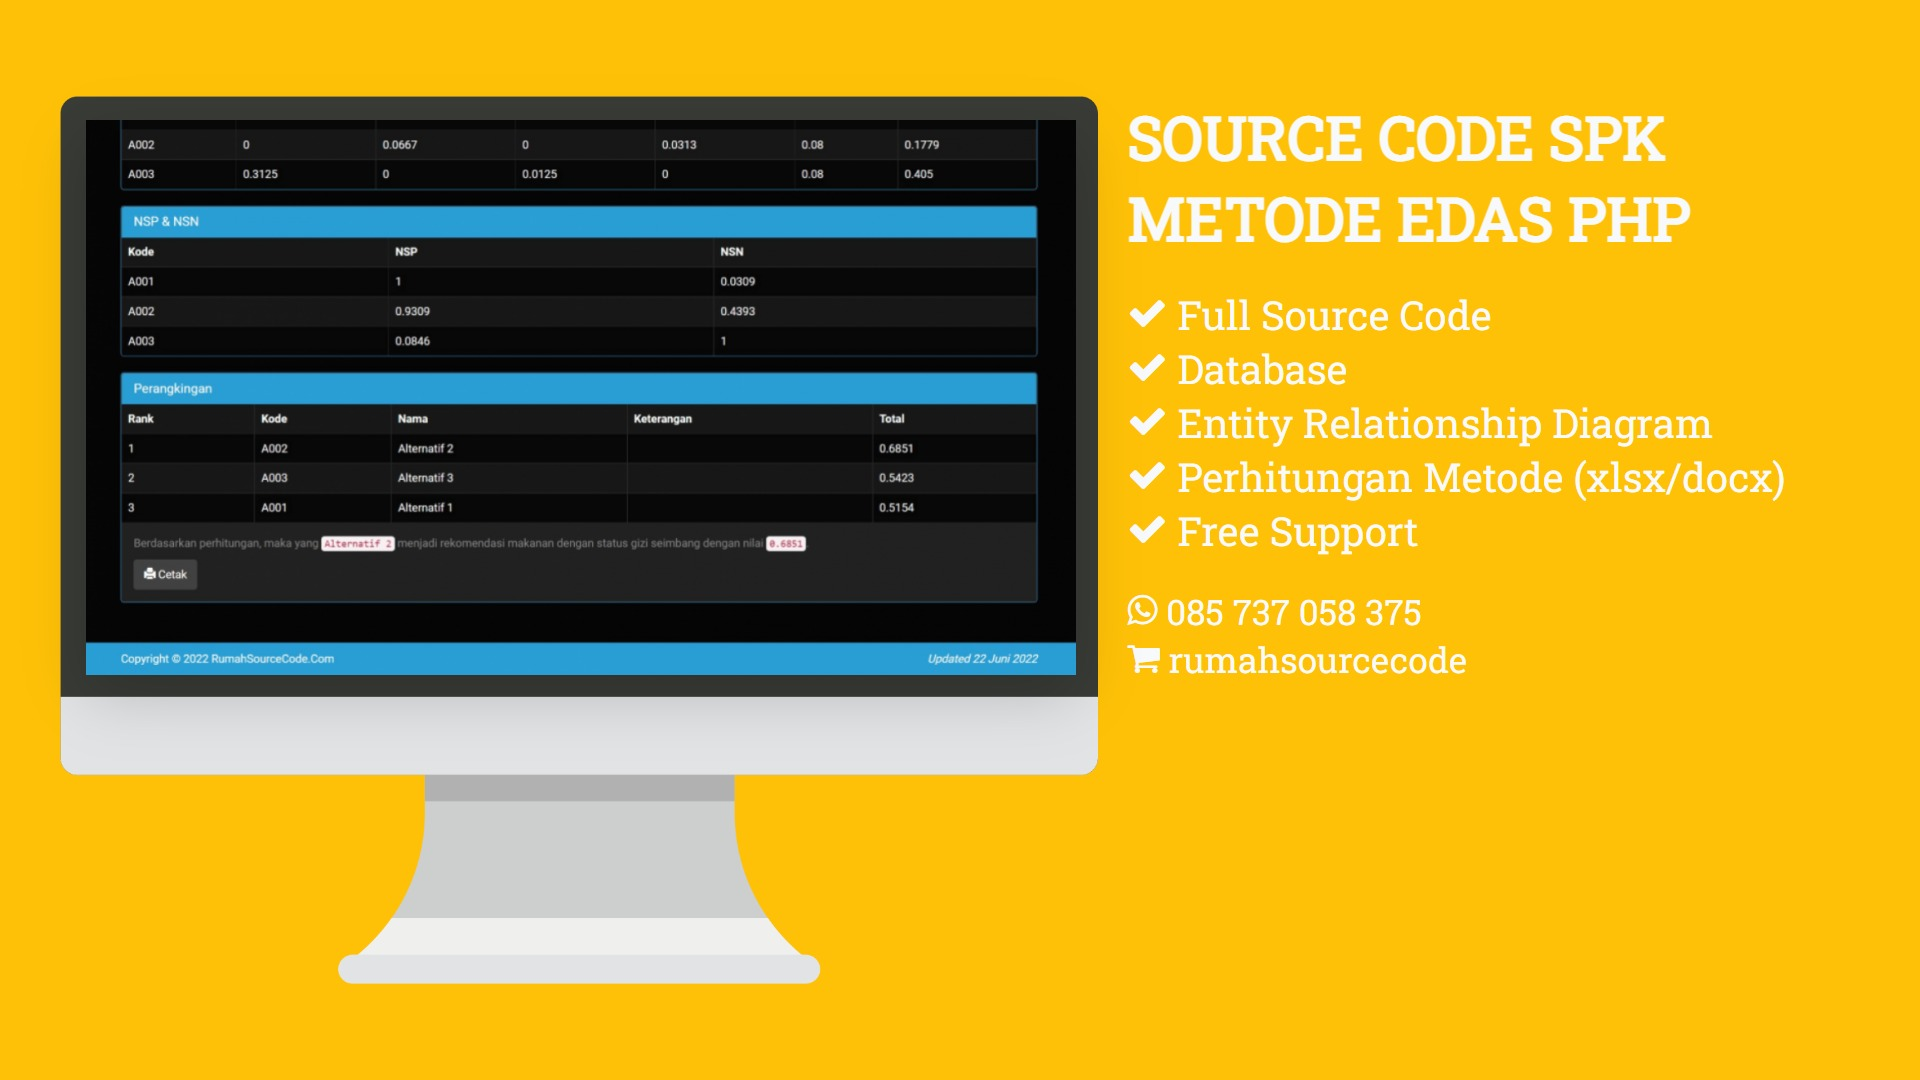 Source Code SPK Metode EDAS PHP